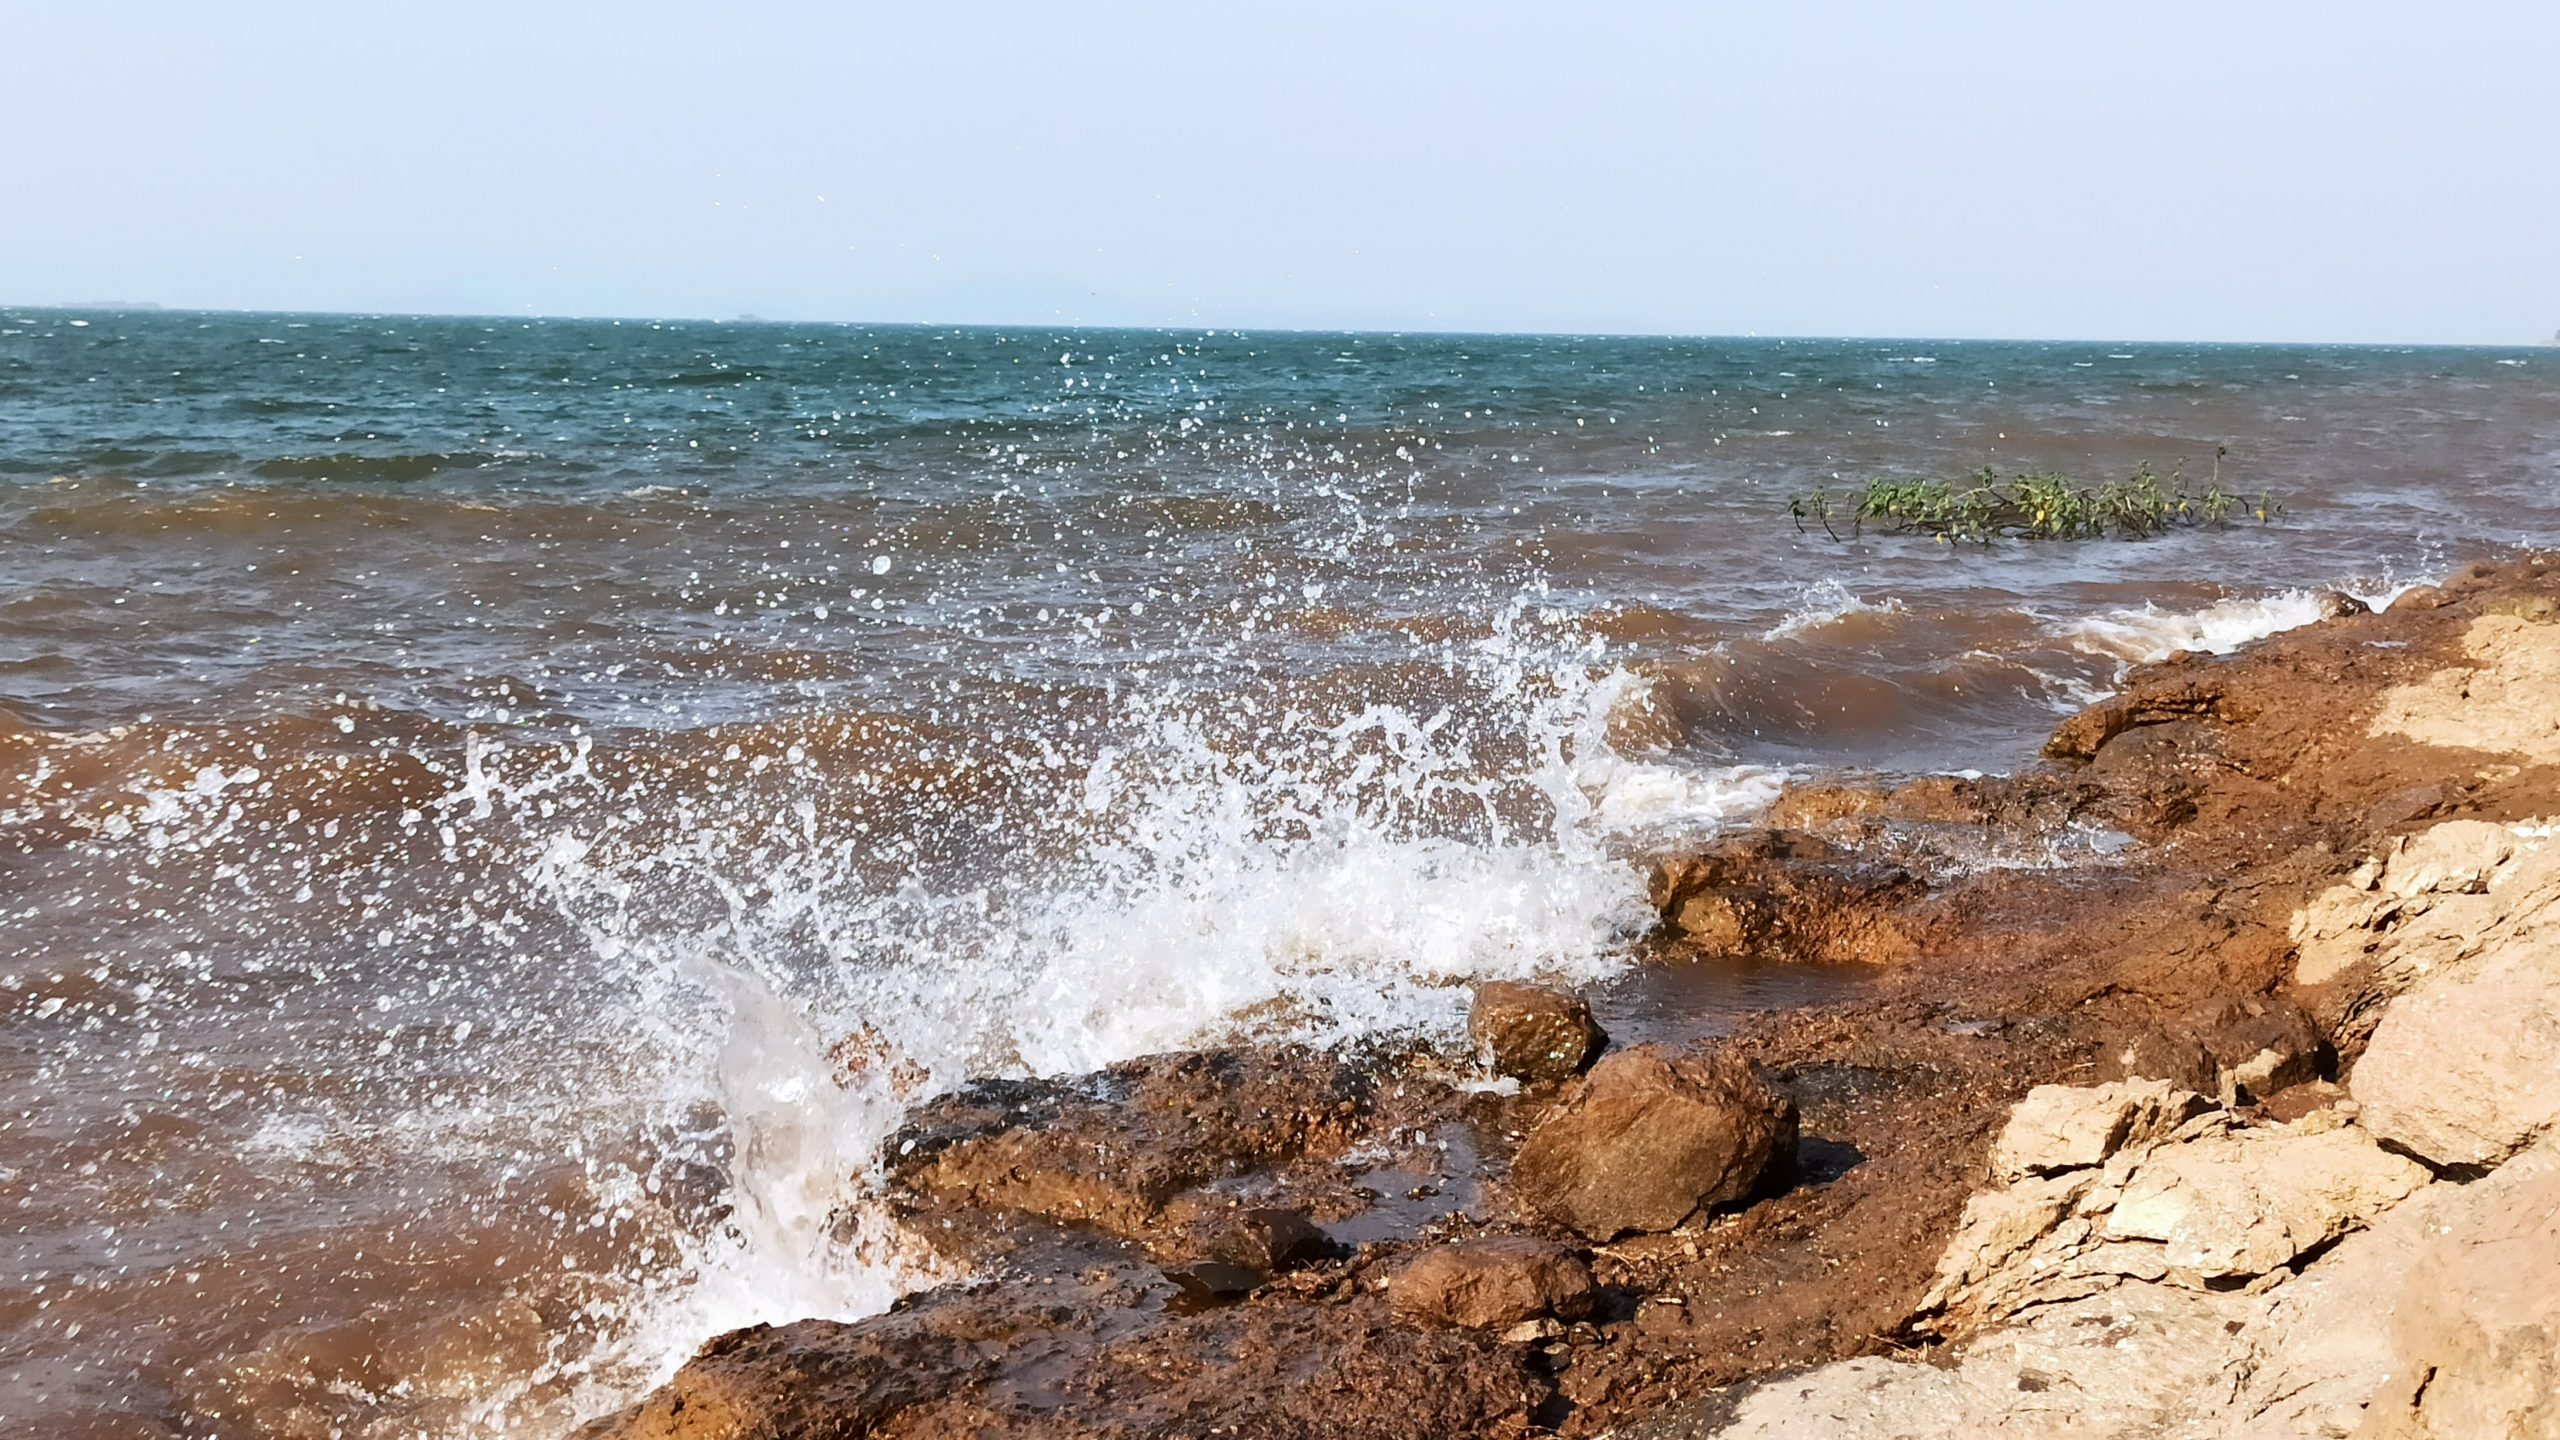 waves splashing against rocks